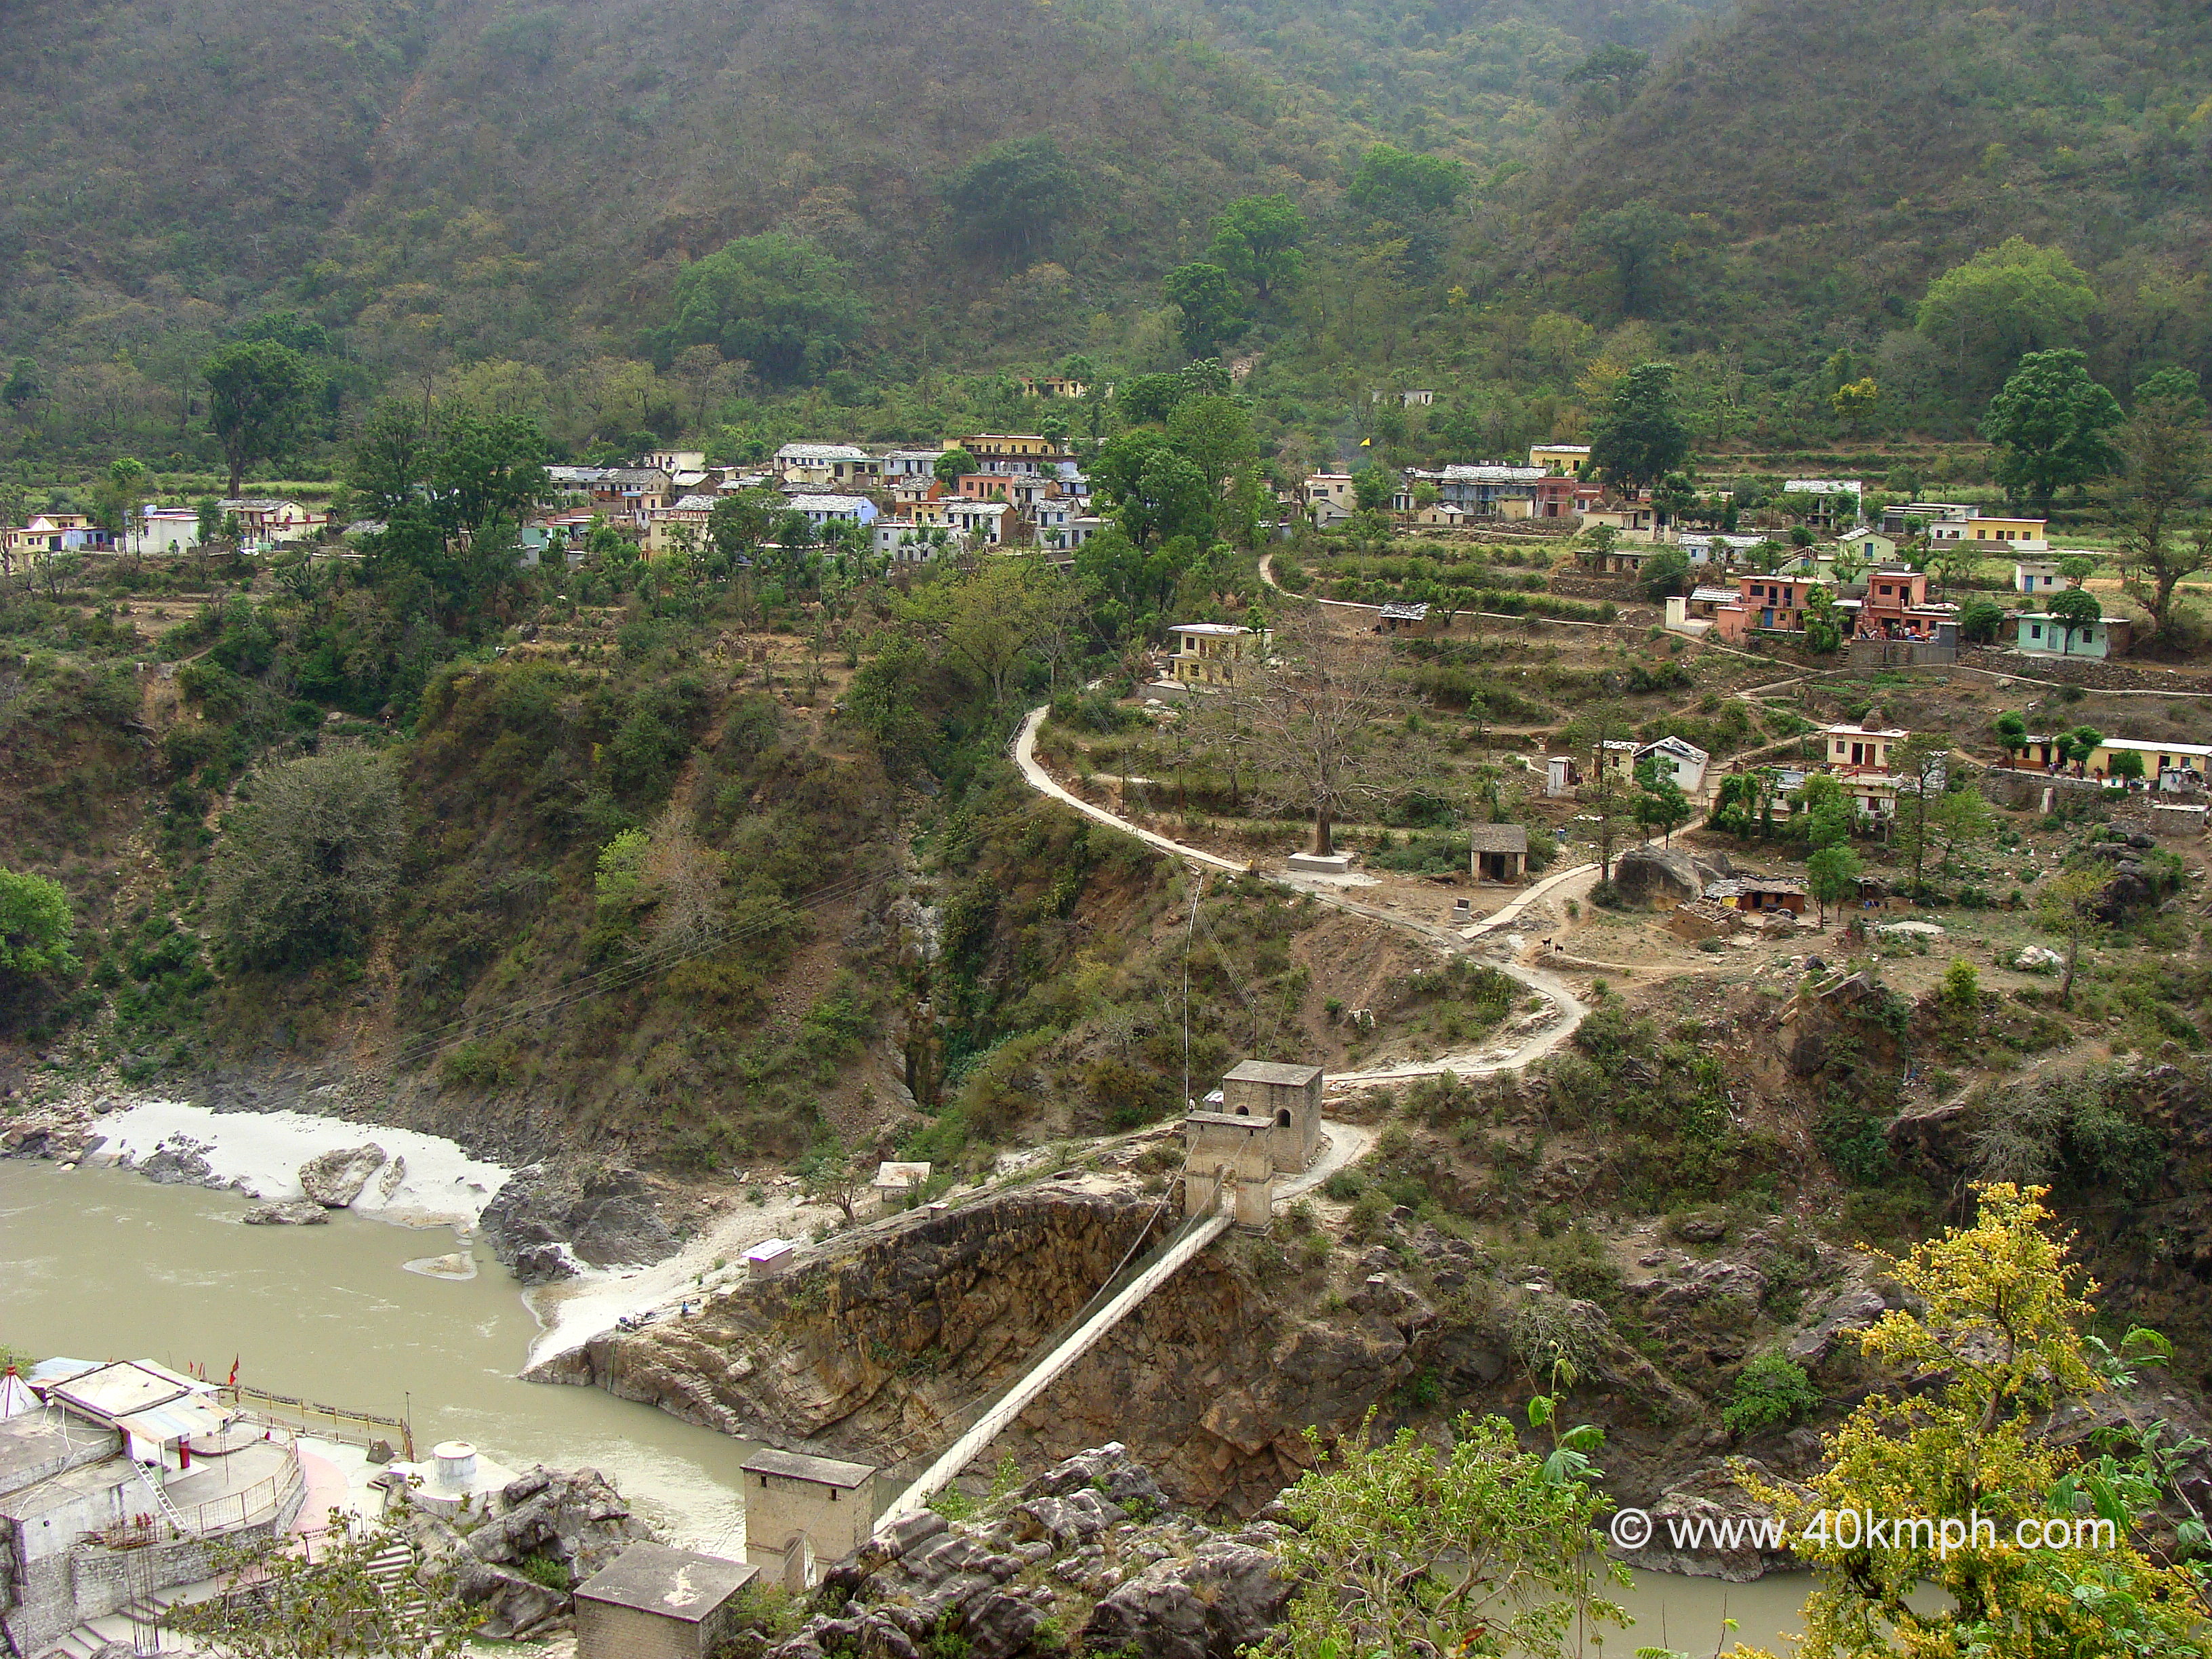 View of Dhari Gaon from Kaliyasaur, Uttarakhand